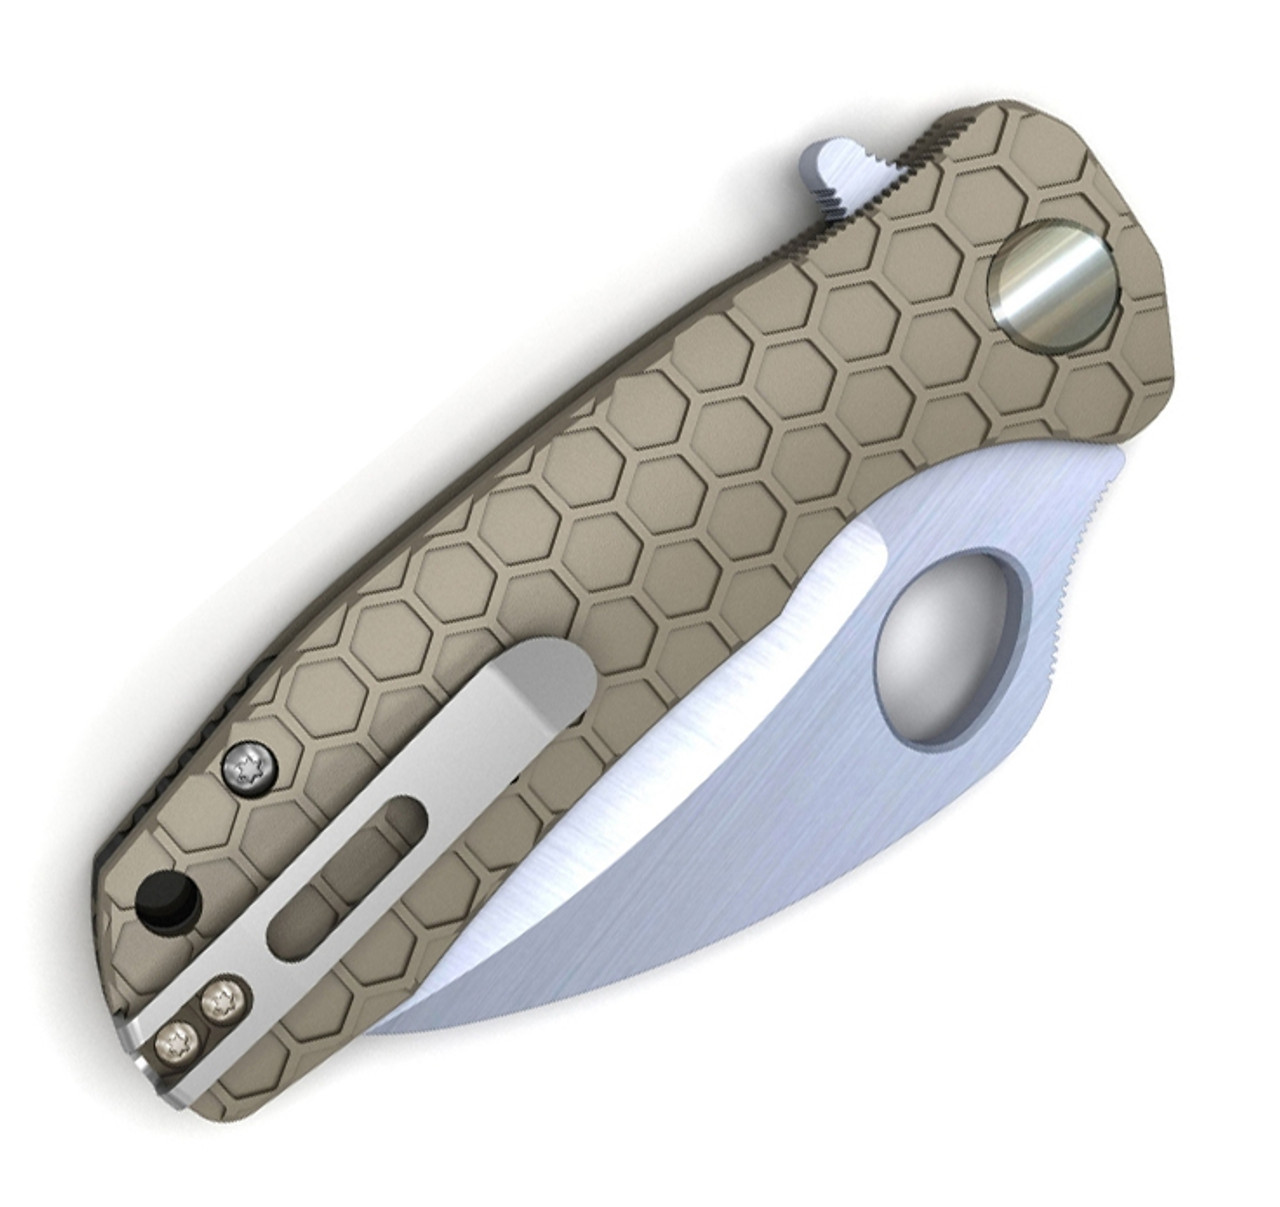 Honey Badger Knives Medium Claw Flipper HB1132, 3.0" 8Cr13Mov Claw Serrated Blade, Tan FRN Handle